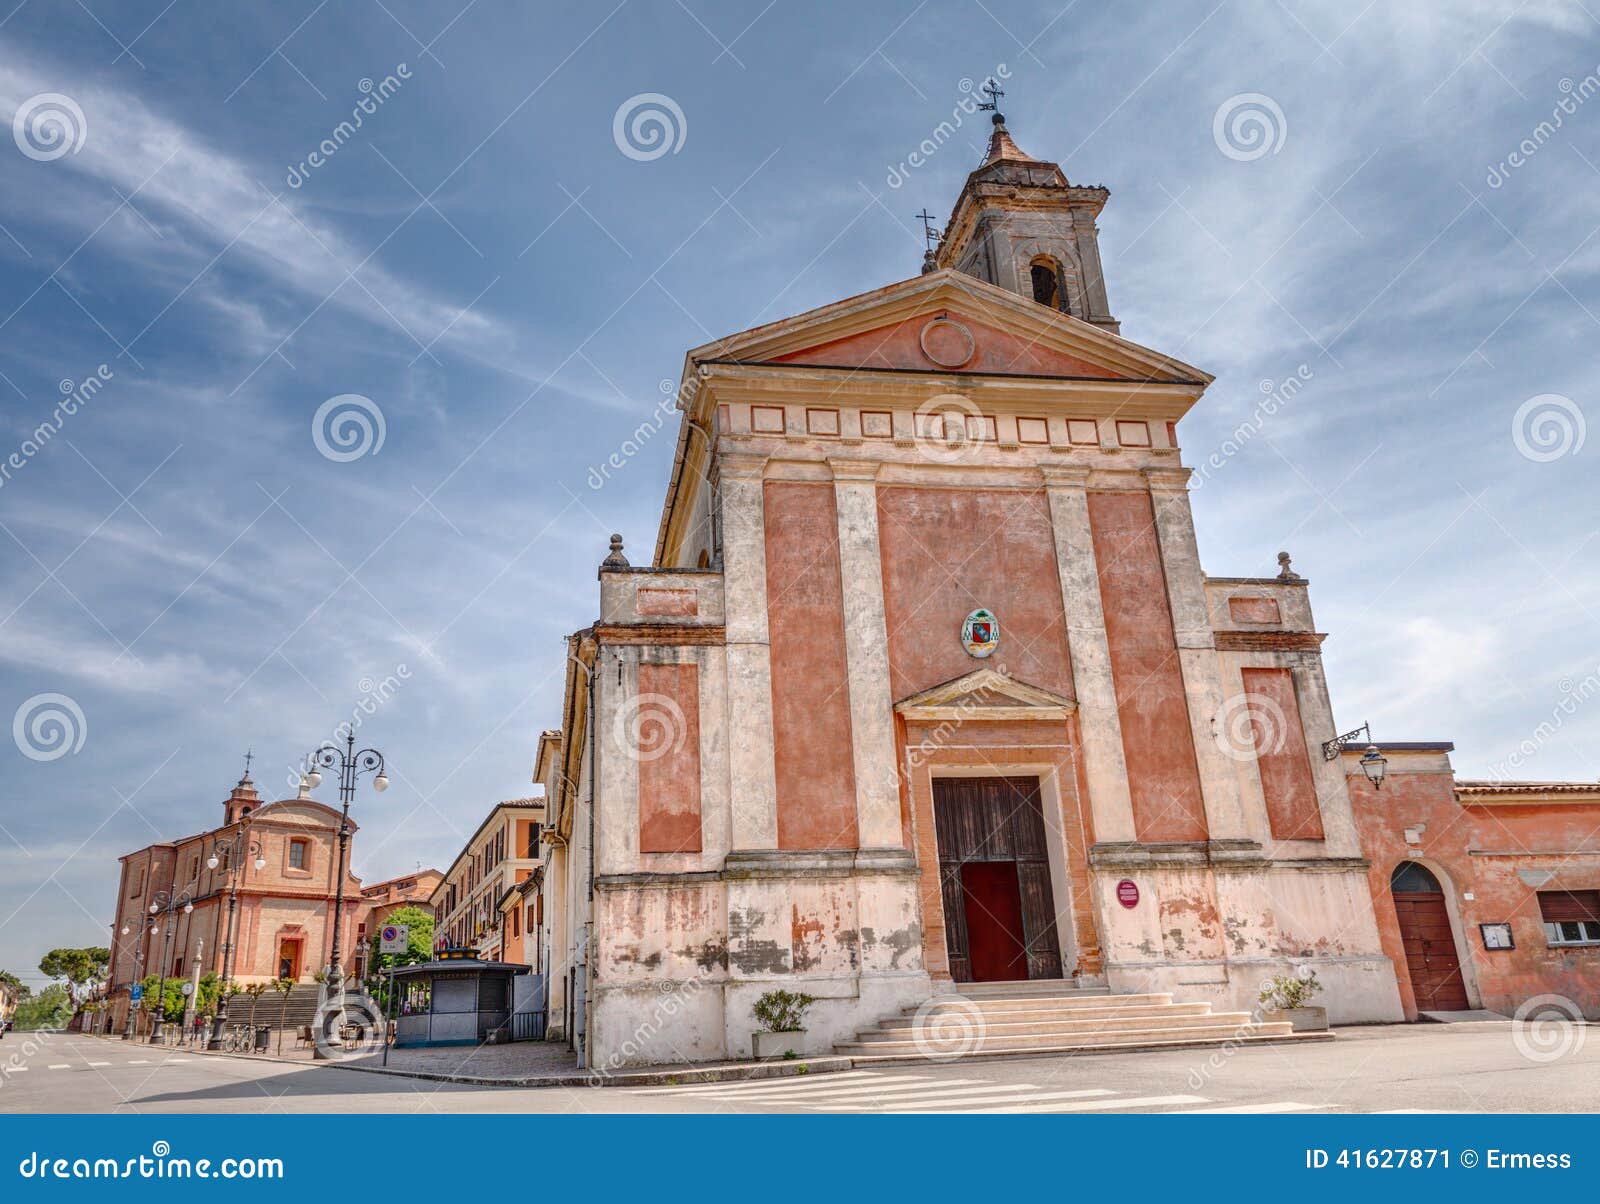 ancient church in longiano, emilia romagna, italy